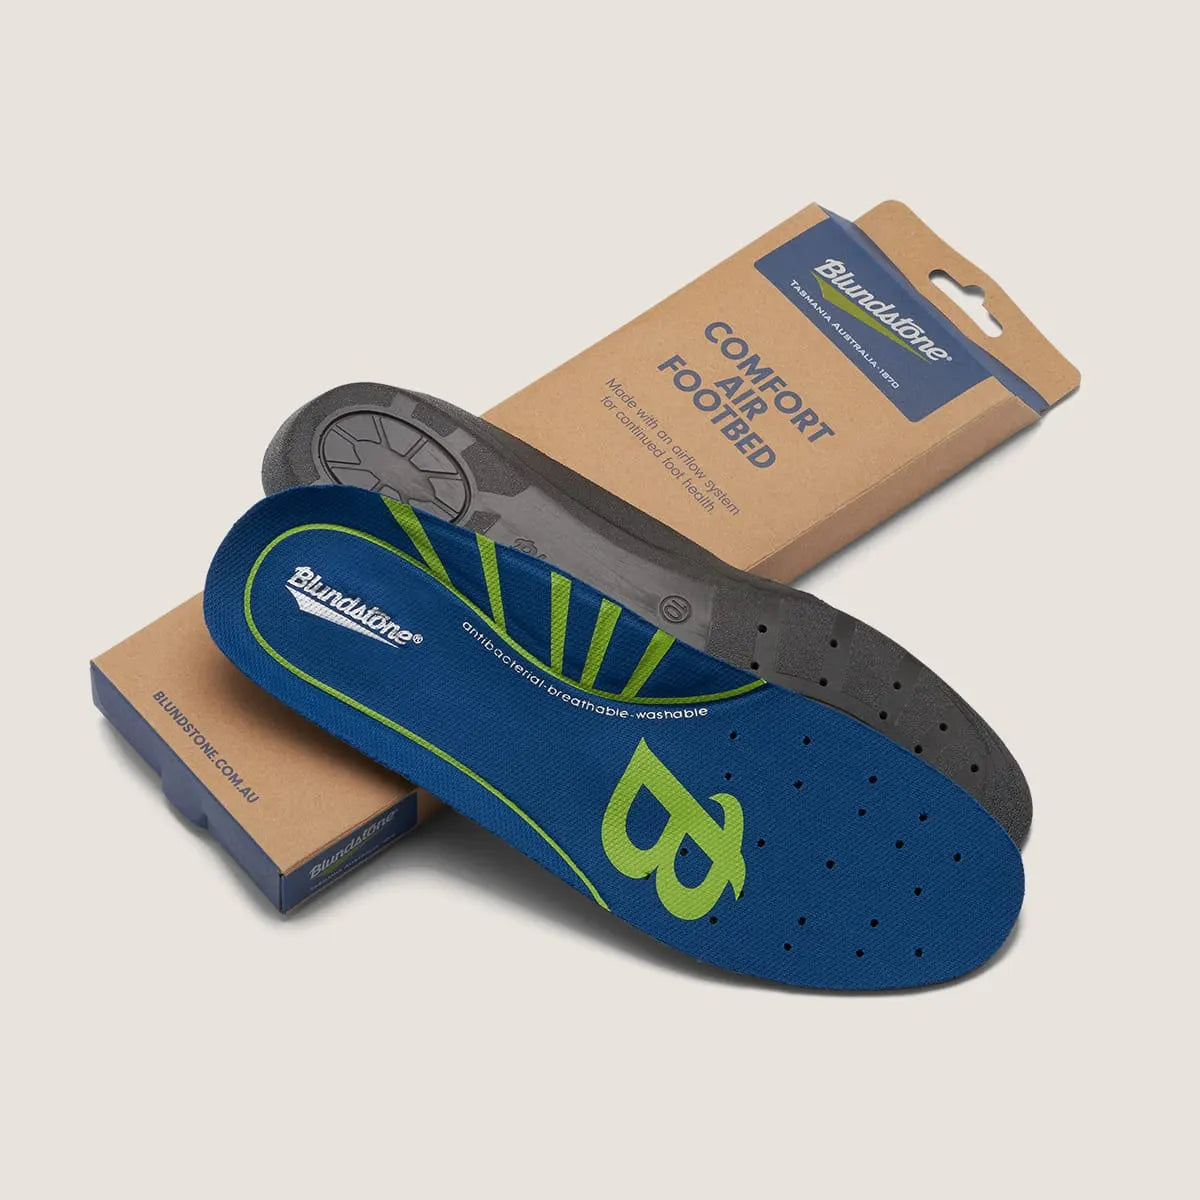 Pair of Blundstone Comfort Air Footbeds on top of packaging